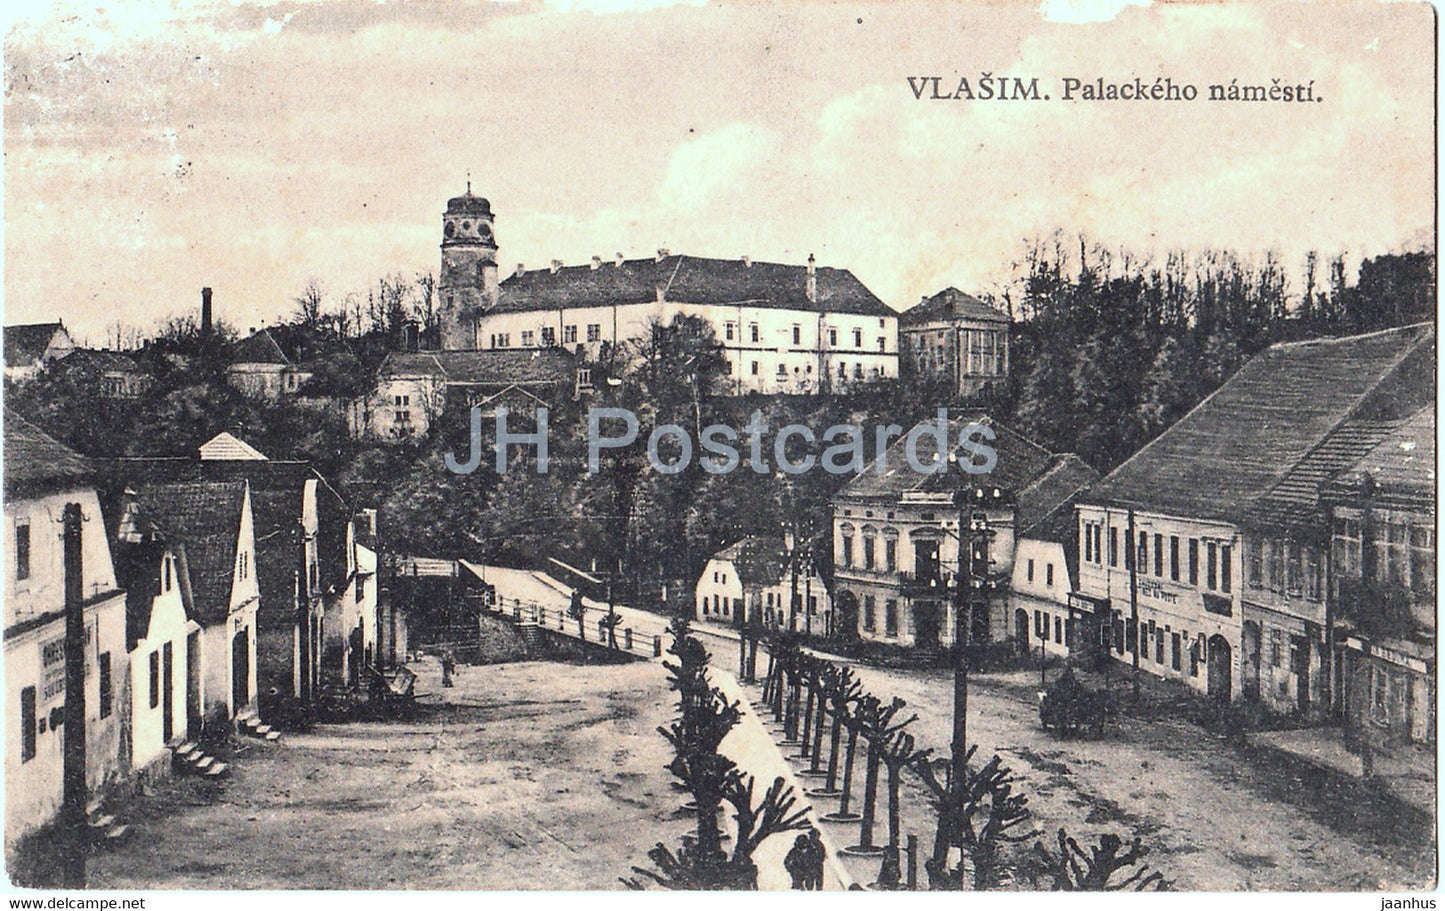 Vlasim - Palackeho namesti - square - old postcard - Czech Republic - used - JH Postcards